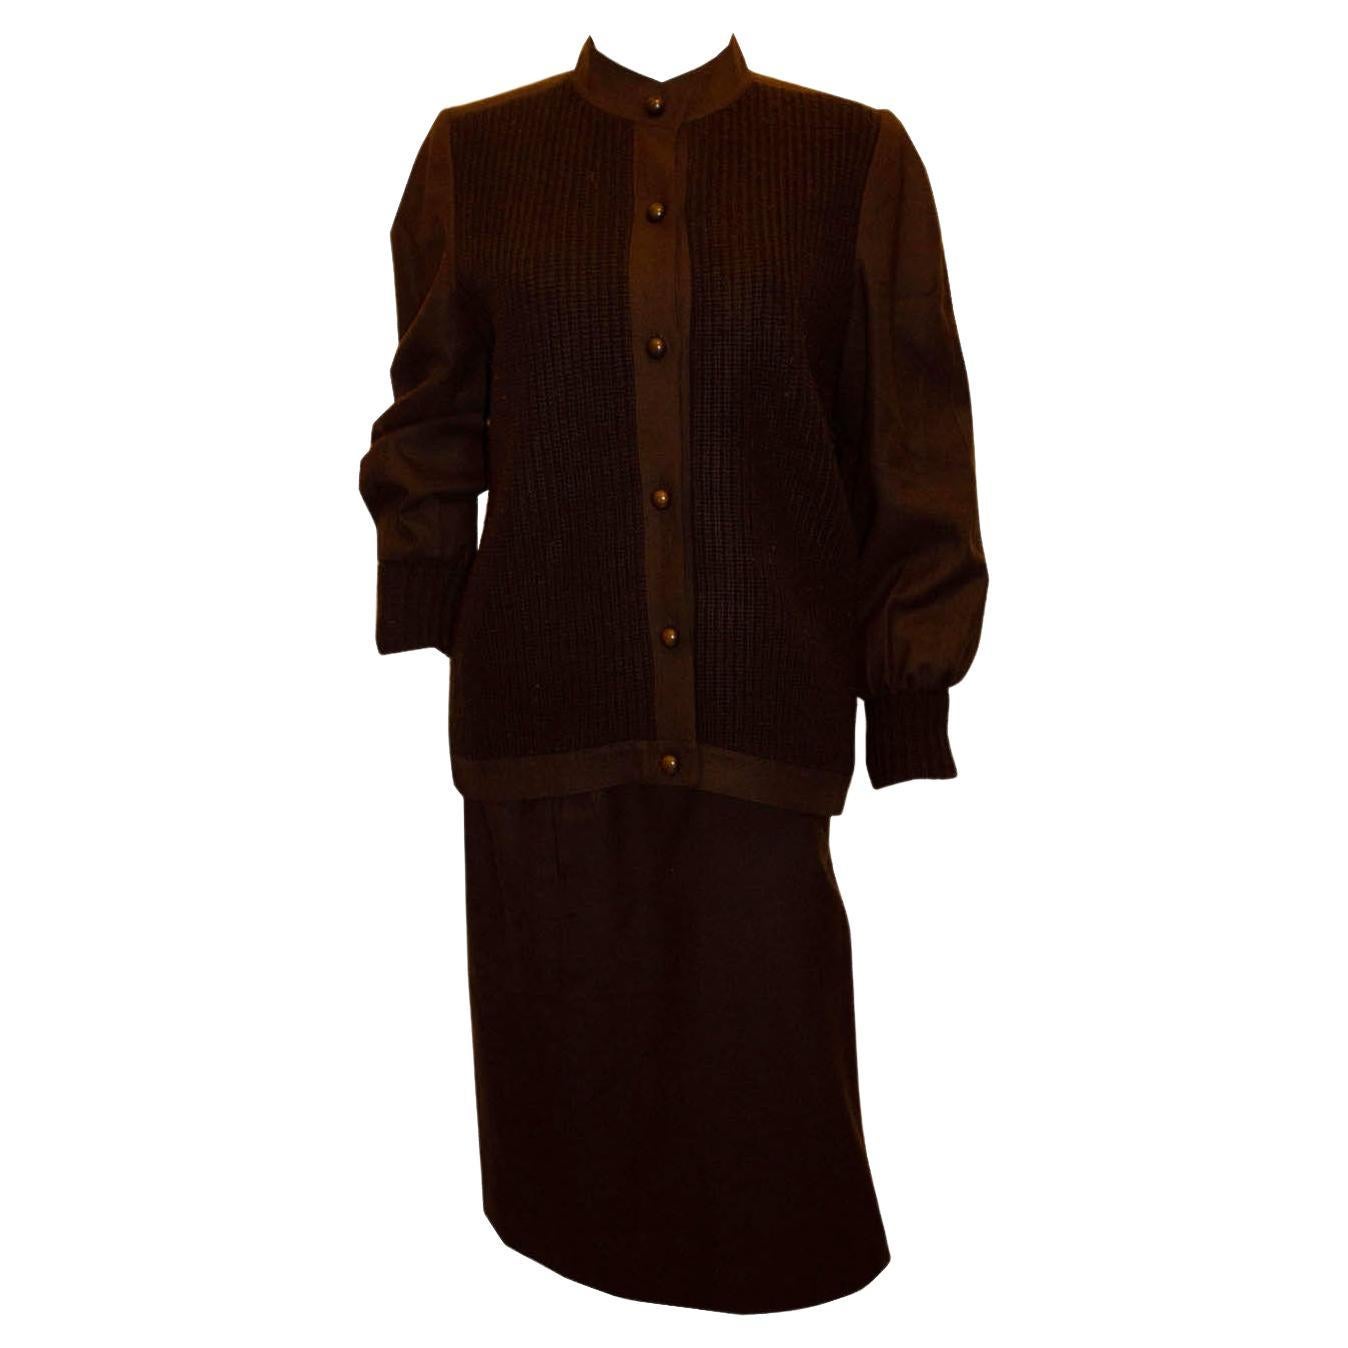 Vintage Christian Dior London Jacket and Skirt For Sale